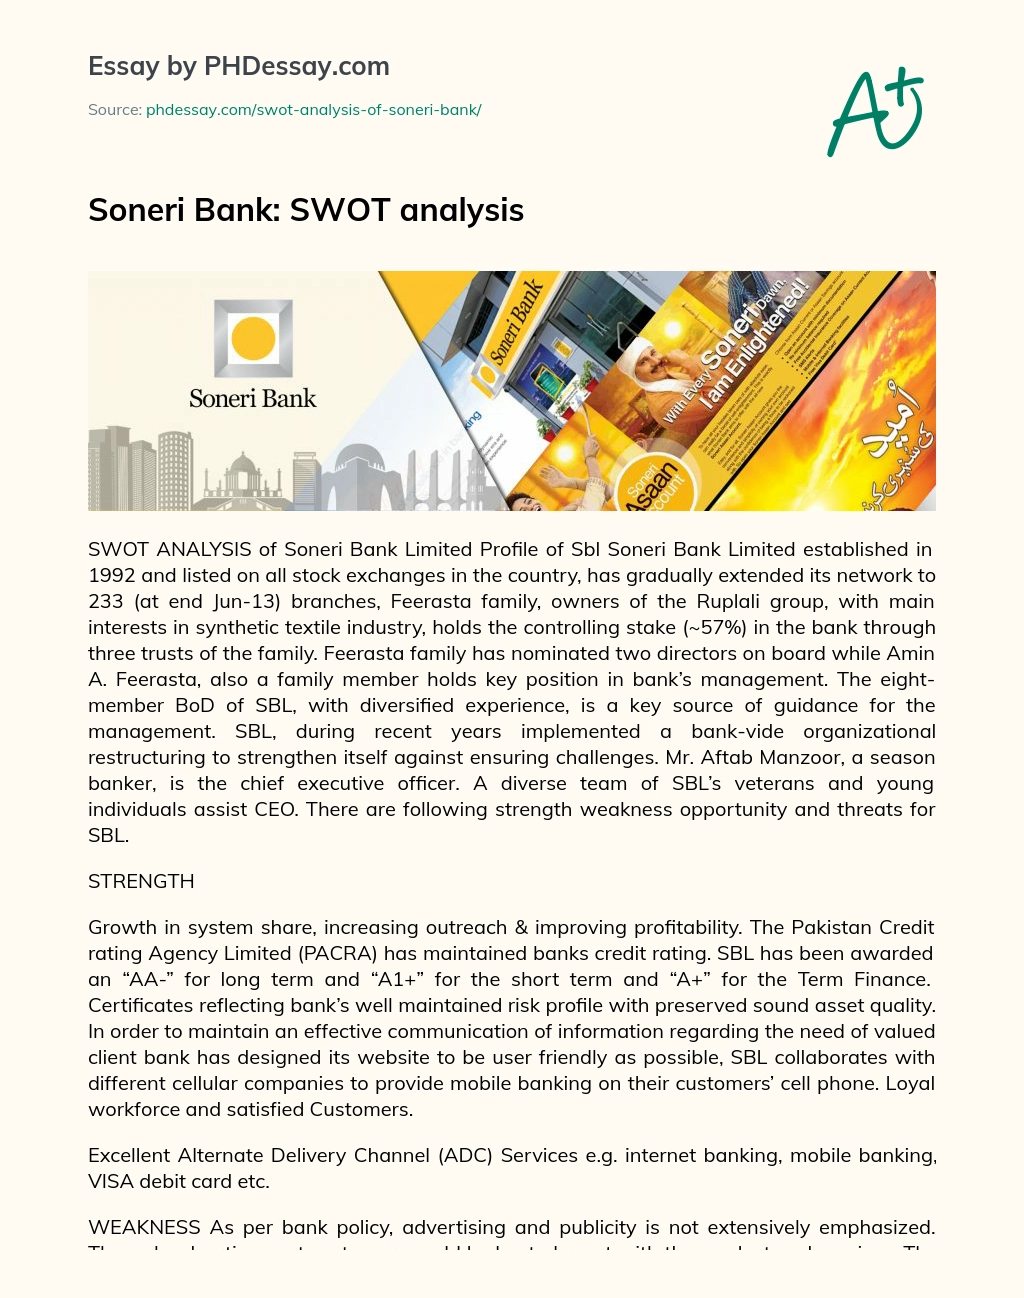 Soneri Bank: SWOT analysis essay